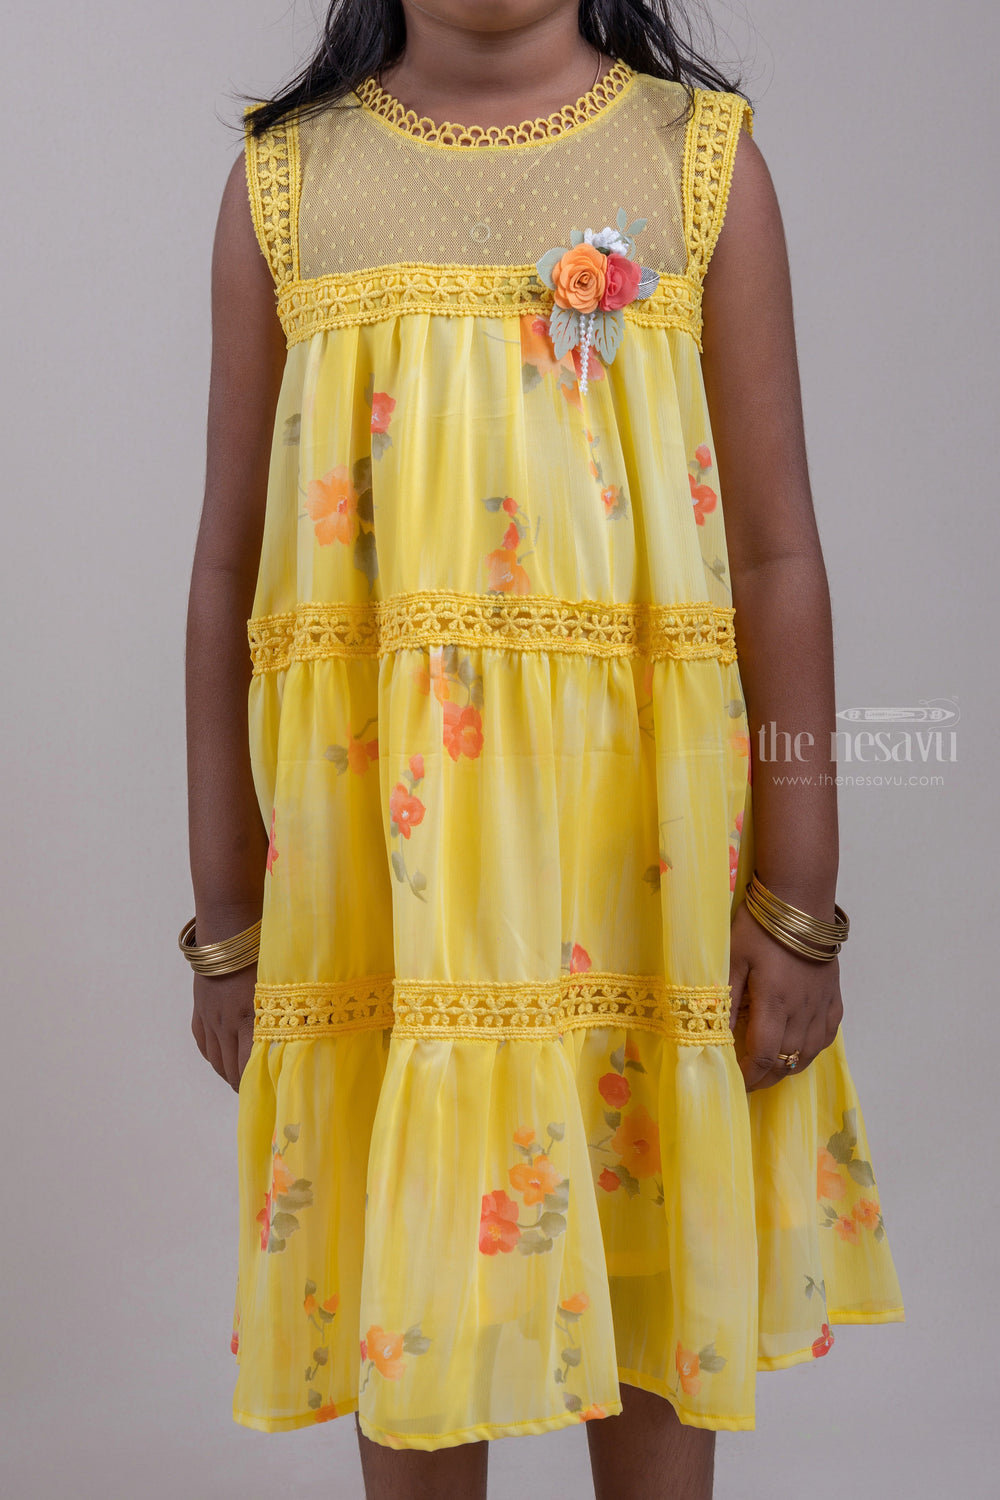 The Nesavu Frocks & Dresses Charming Yellow Floral Printed Sleeveless Frock For Girls psr silks Nesavu